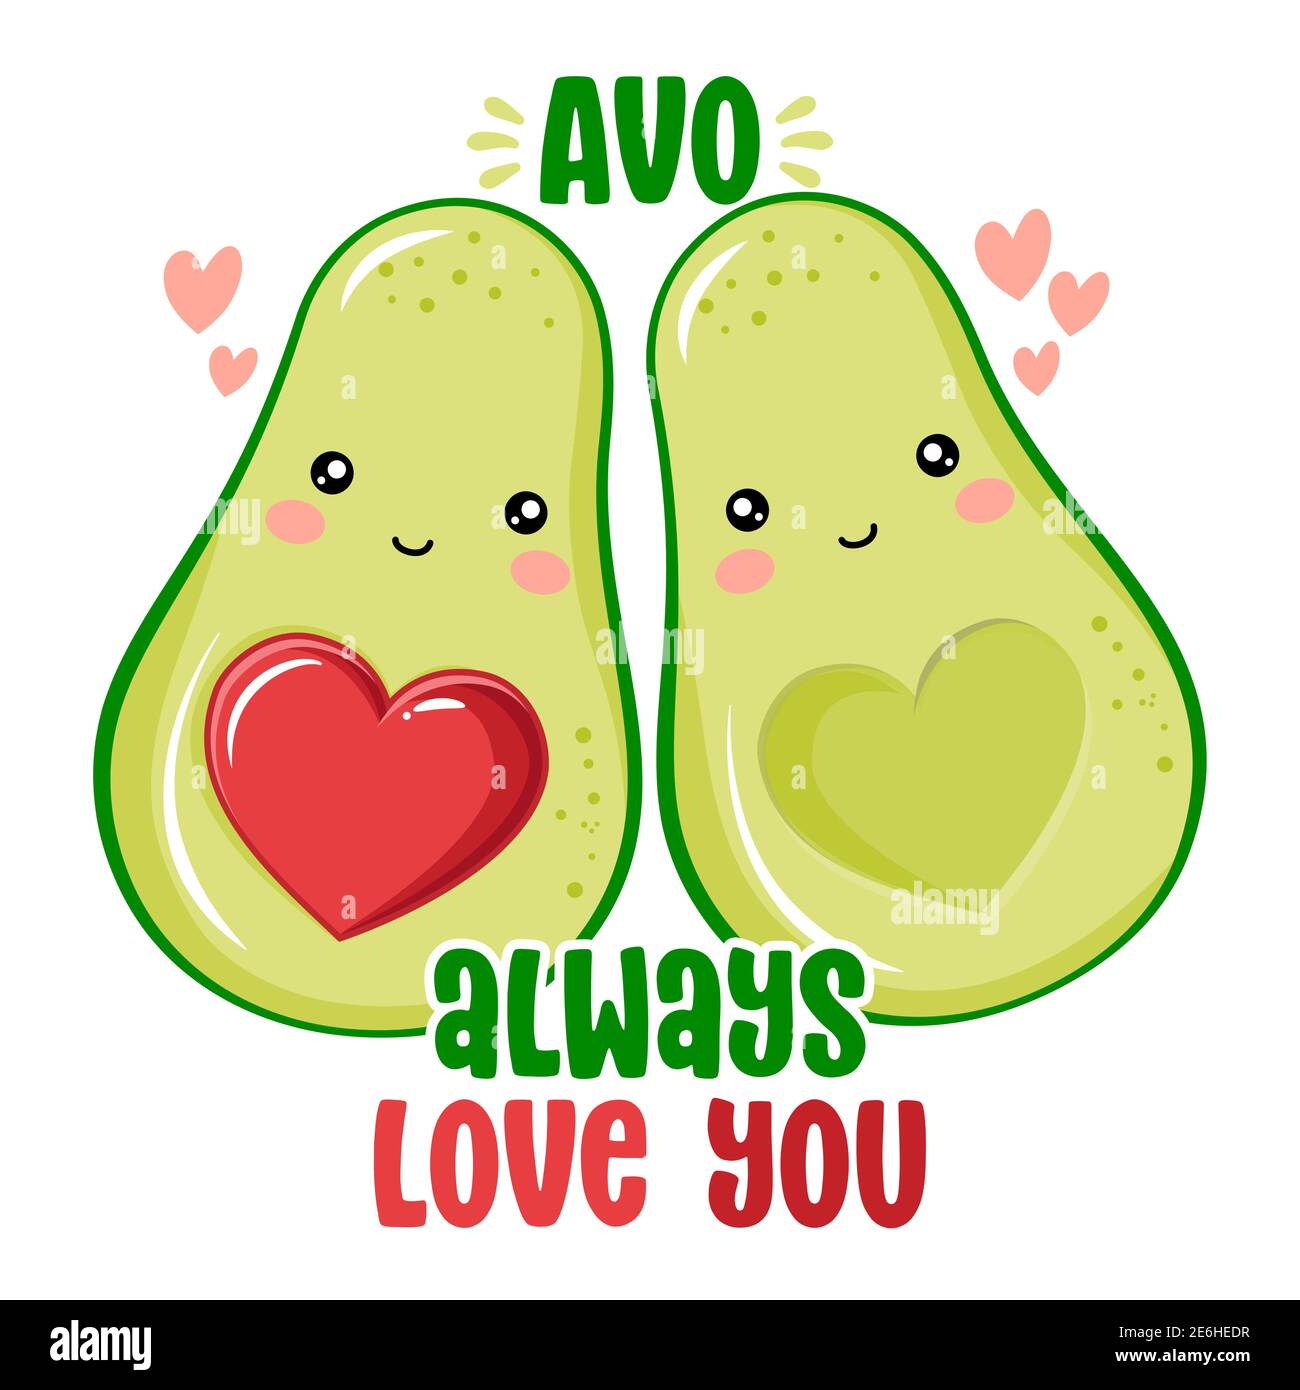 Avo (I will) always love you - Cute hand drawn avocado couple ...